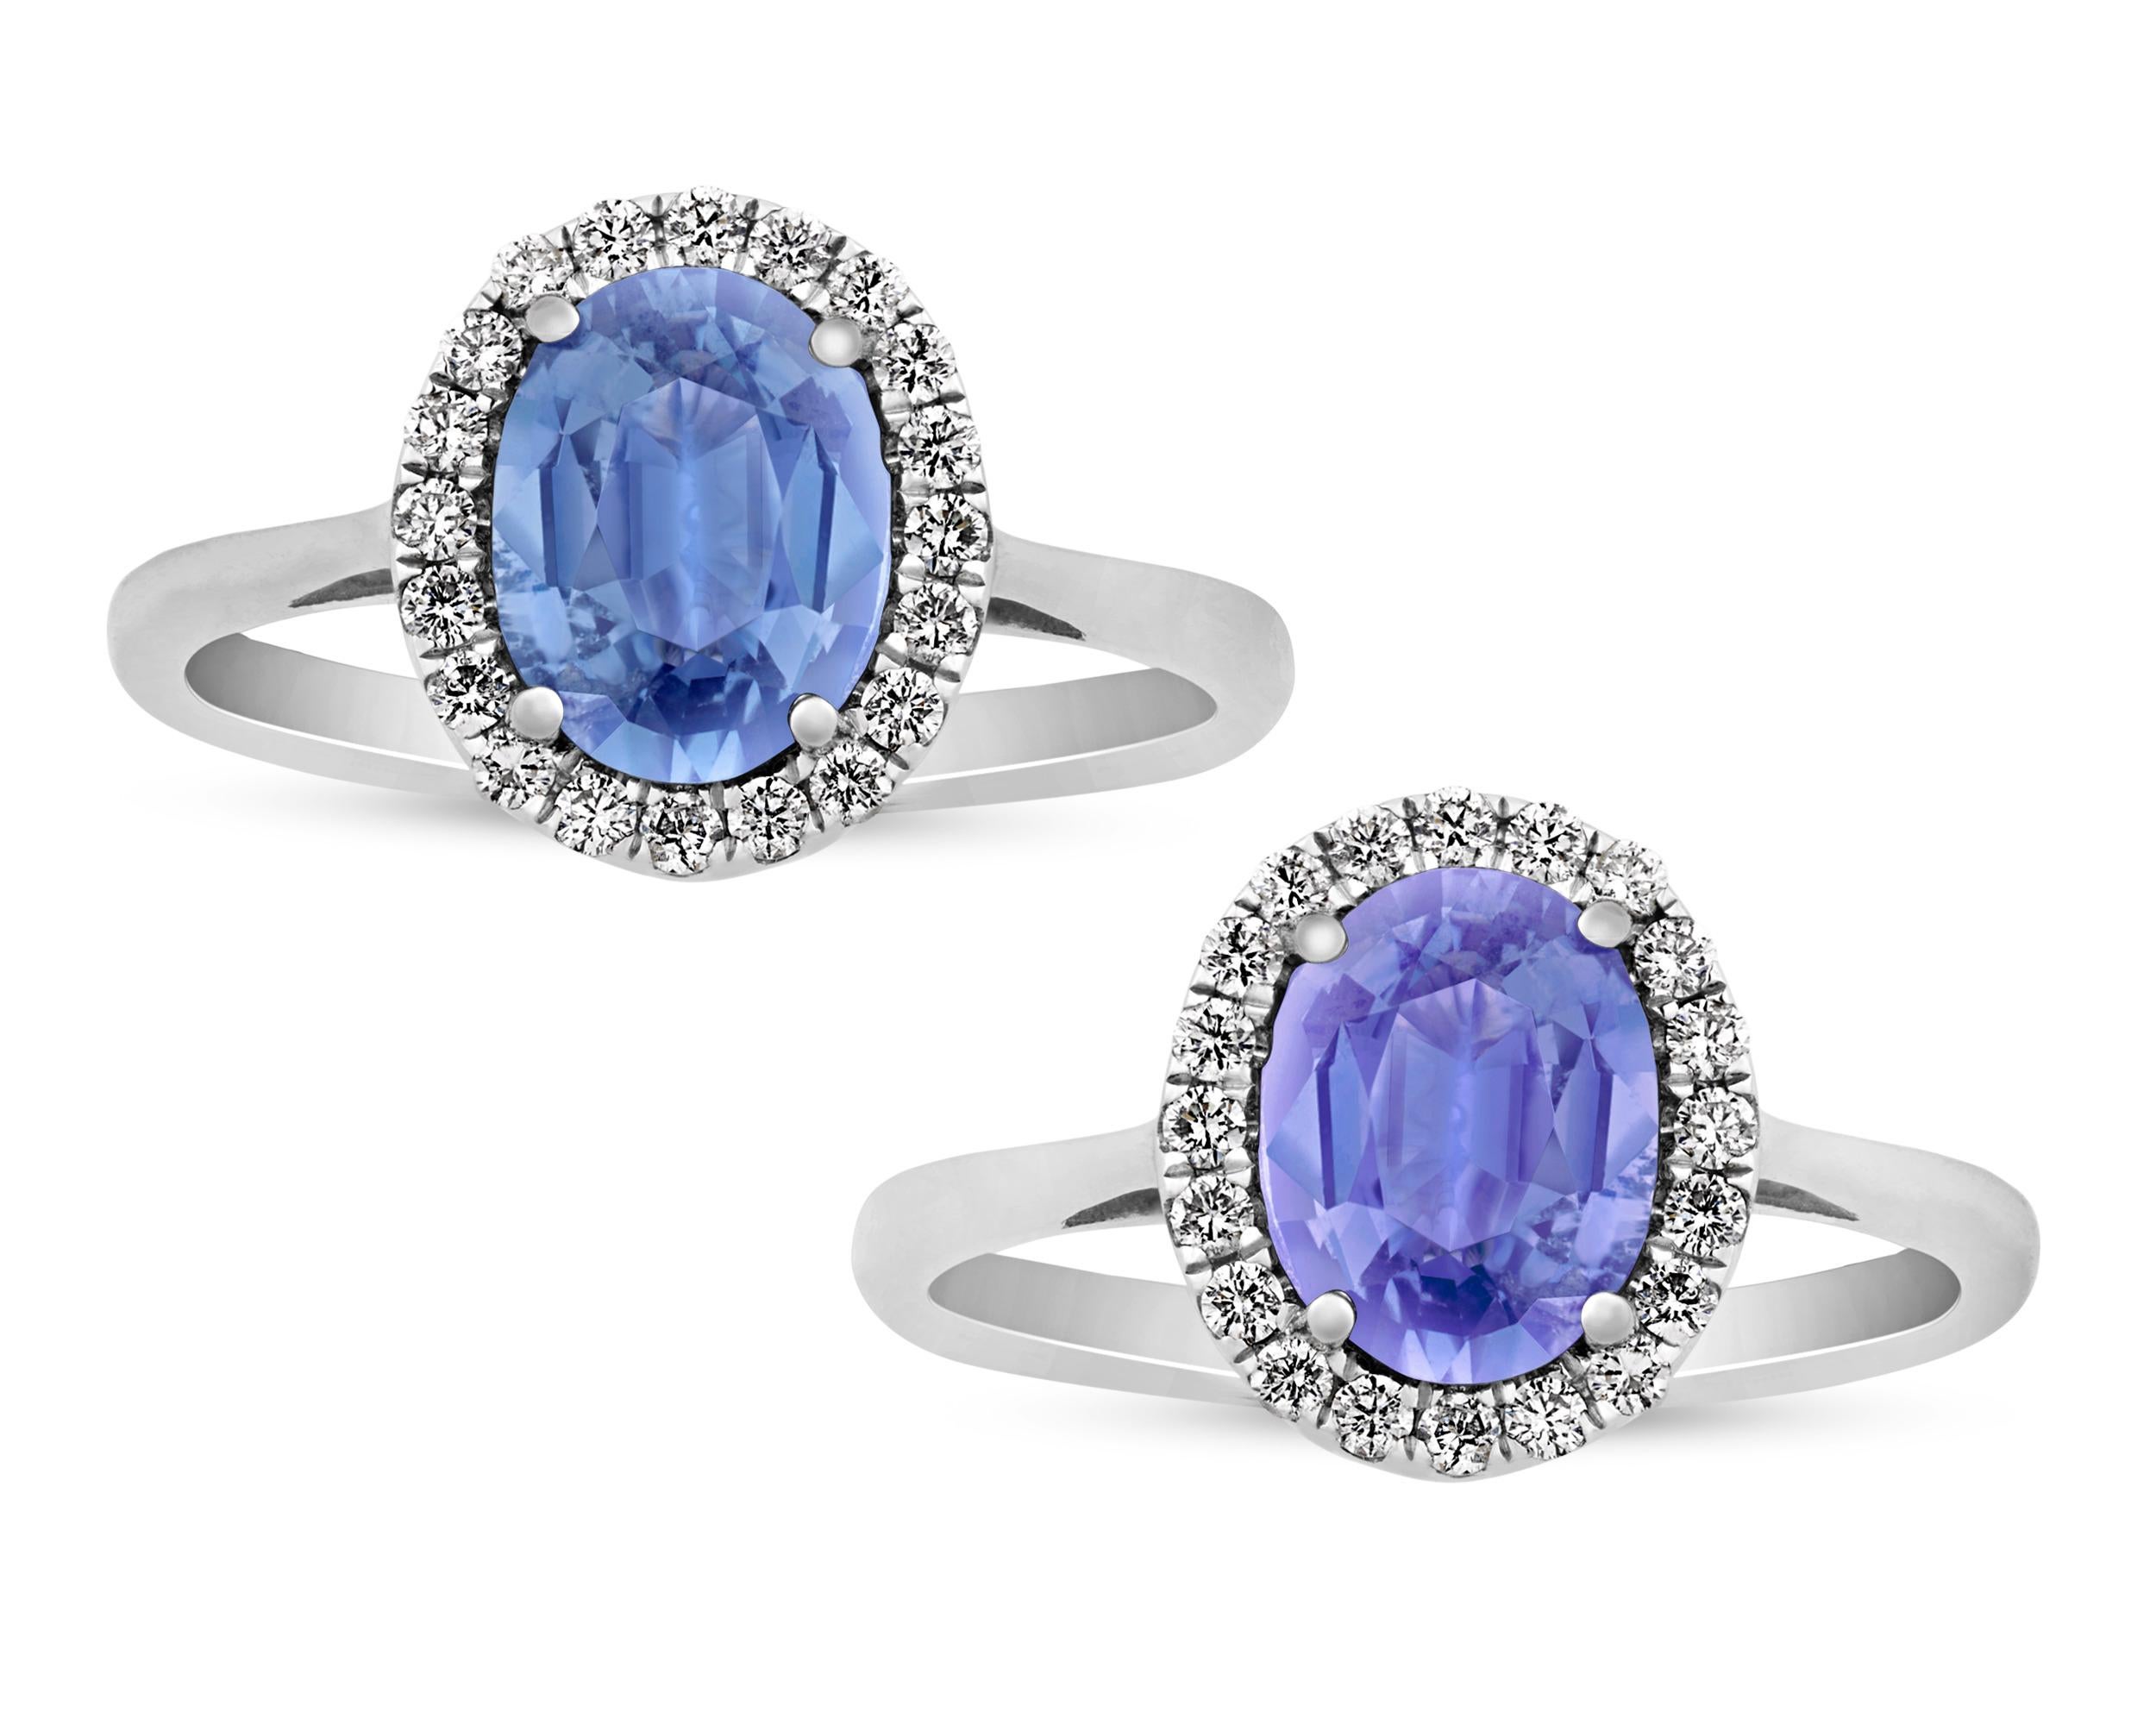 Brilliant Cut Color Change Sapphire Ring, 1.64 Carats For Sale